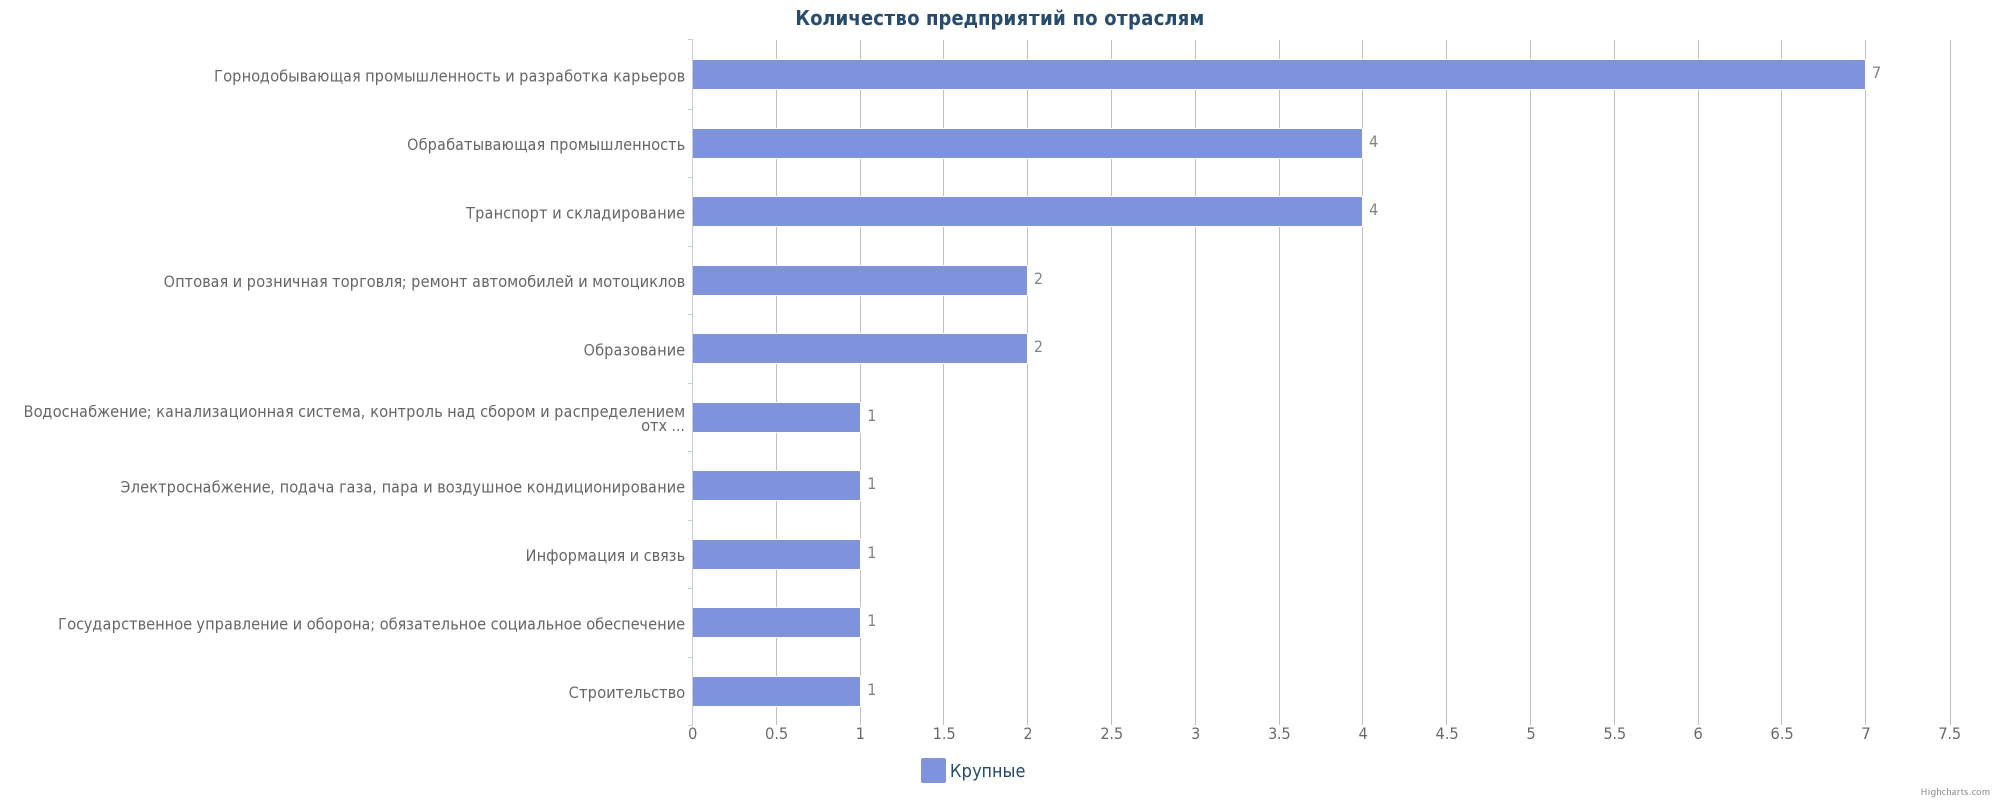 Крупные предприятия Казахстана по отраслям: Актобе, Кандыагаш, Хромтау, с. Коктау